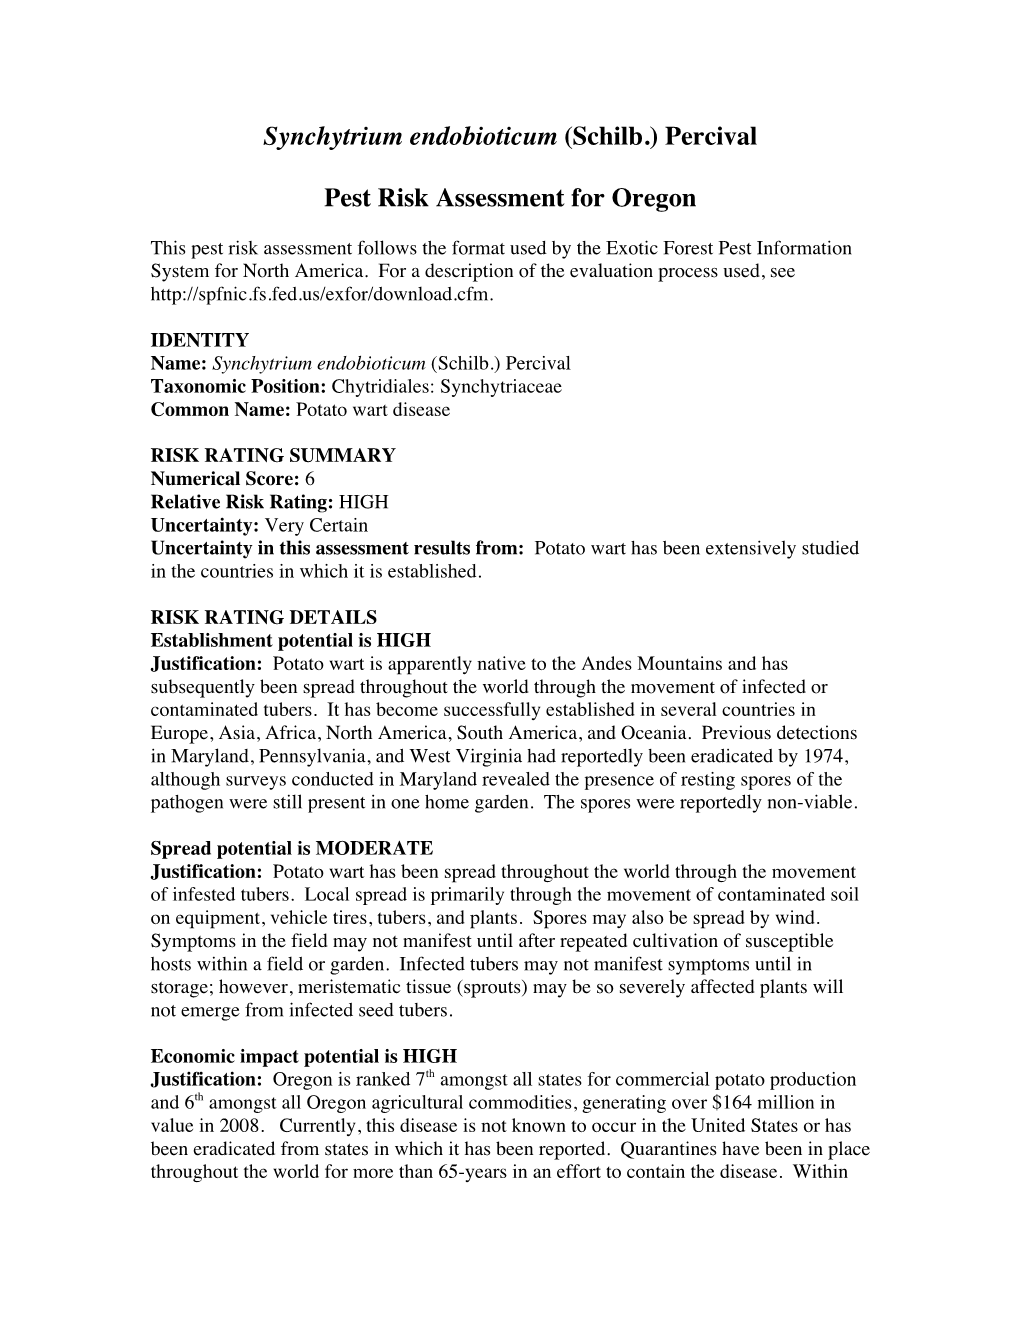 Synchytrium Endobioticum (Schilb.) Percival Pest Risk Assessment for Oregon